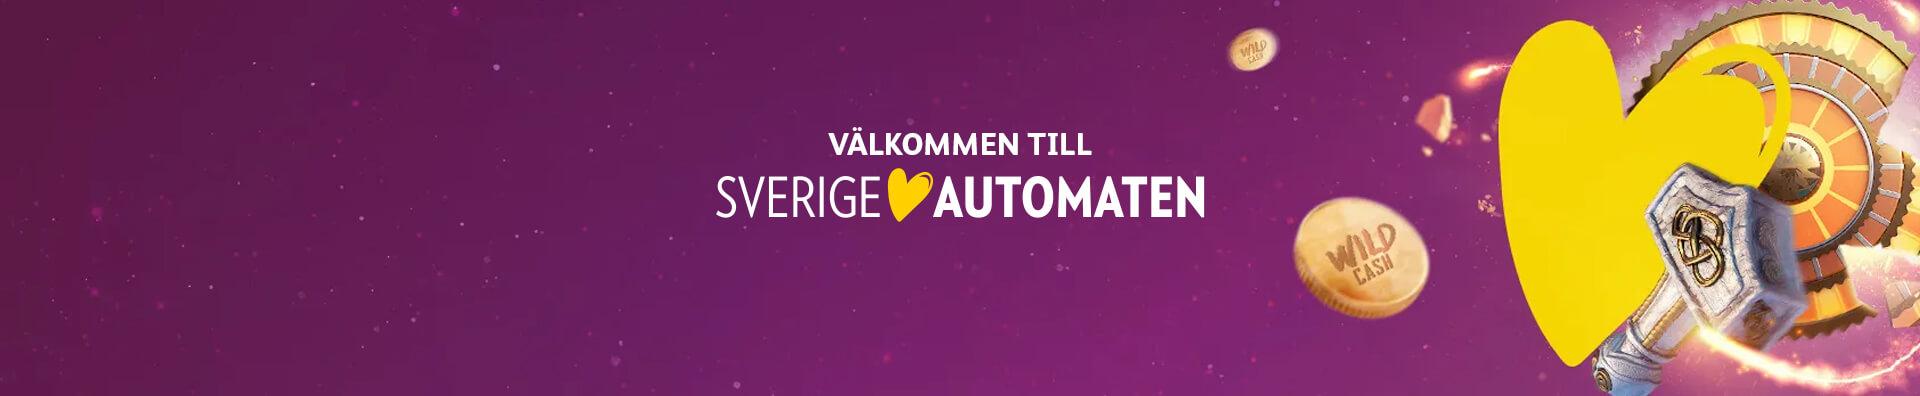 SverigeAutomaten banner